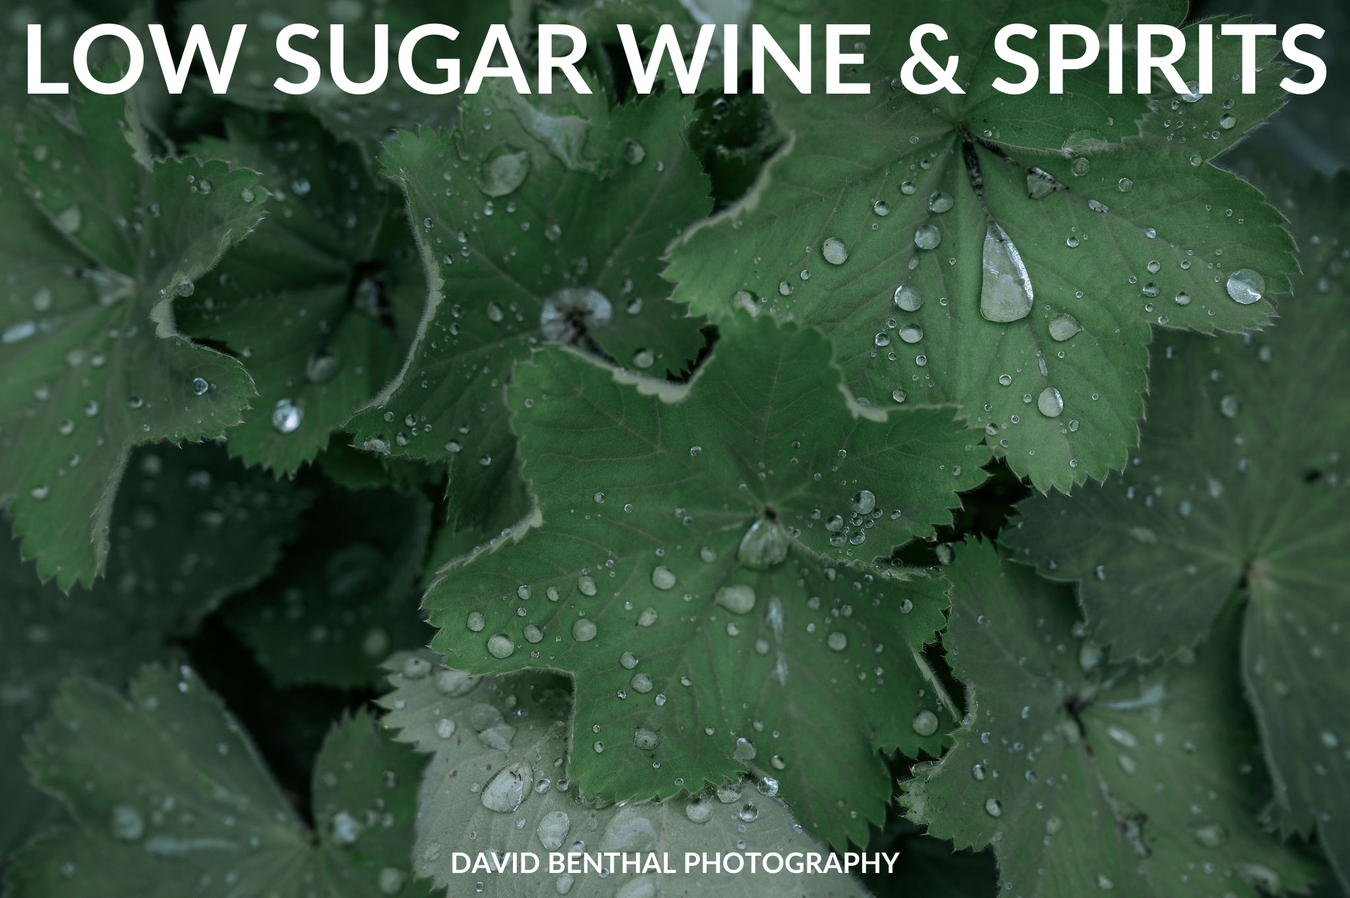 Wine and Spirits - Low Sugar